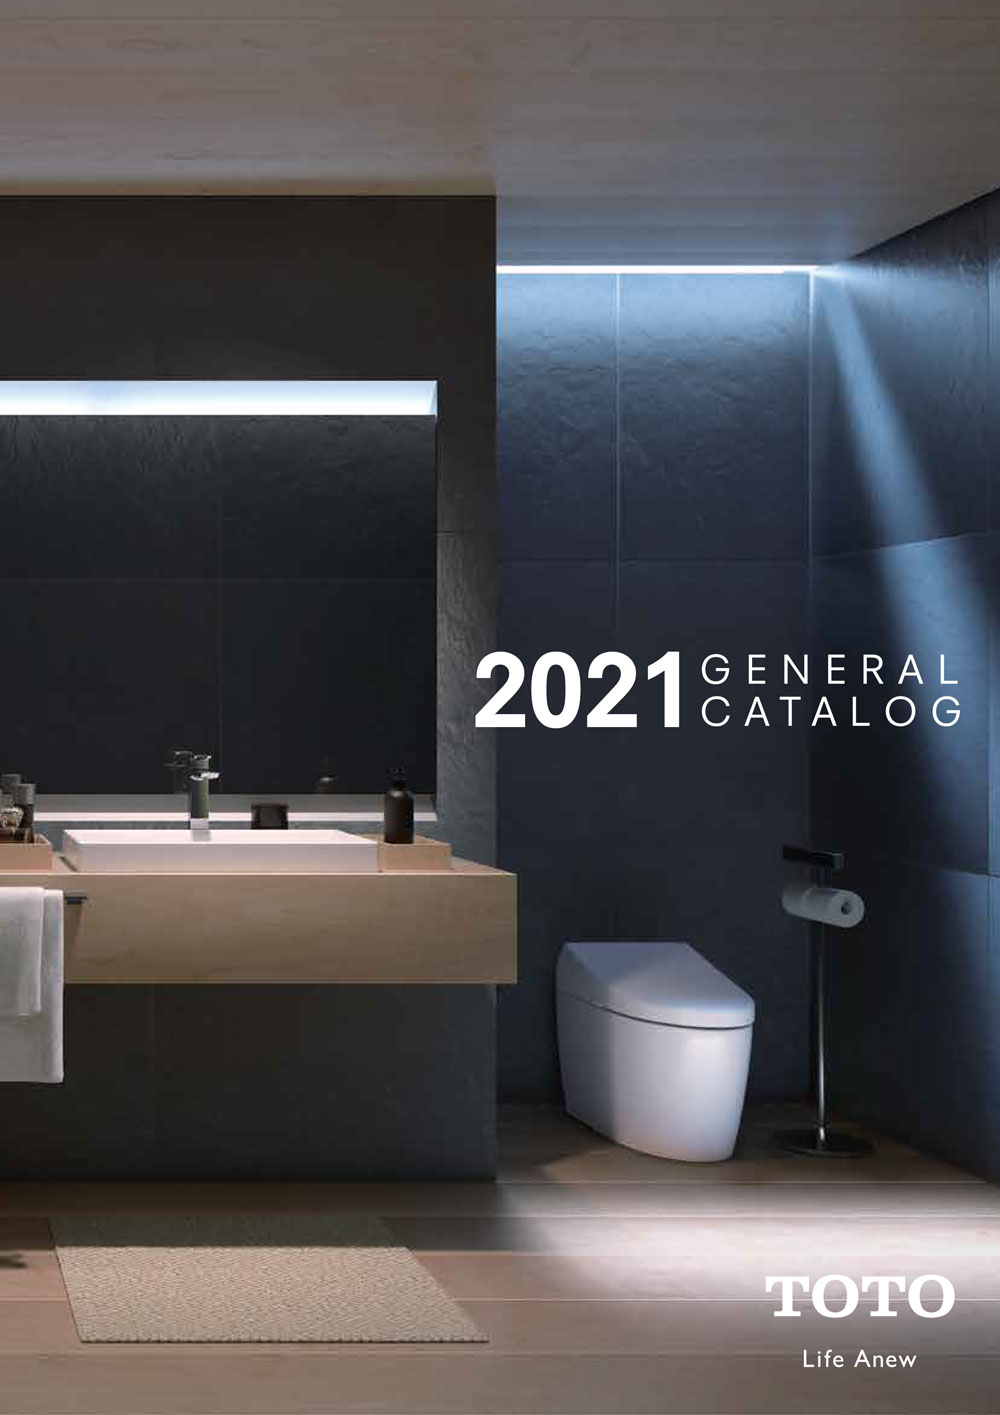 TOTO Bathroom 2021 General Catalog